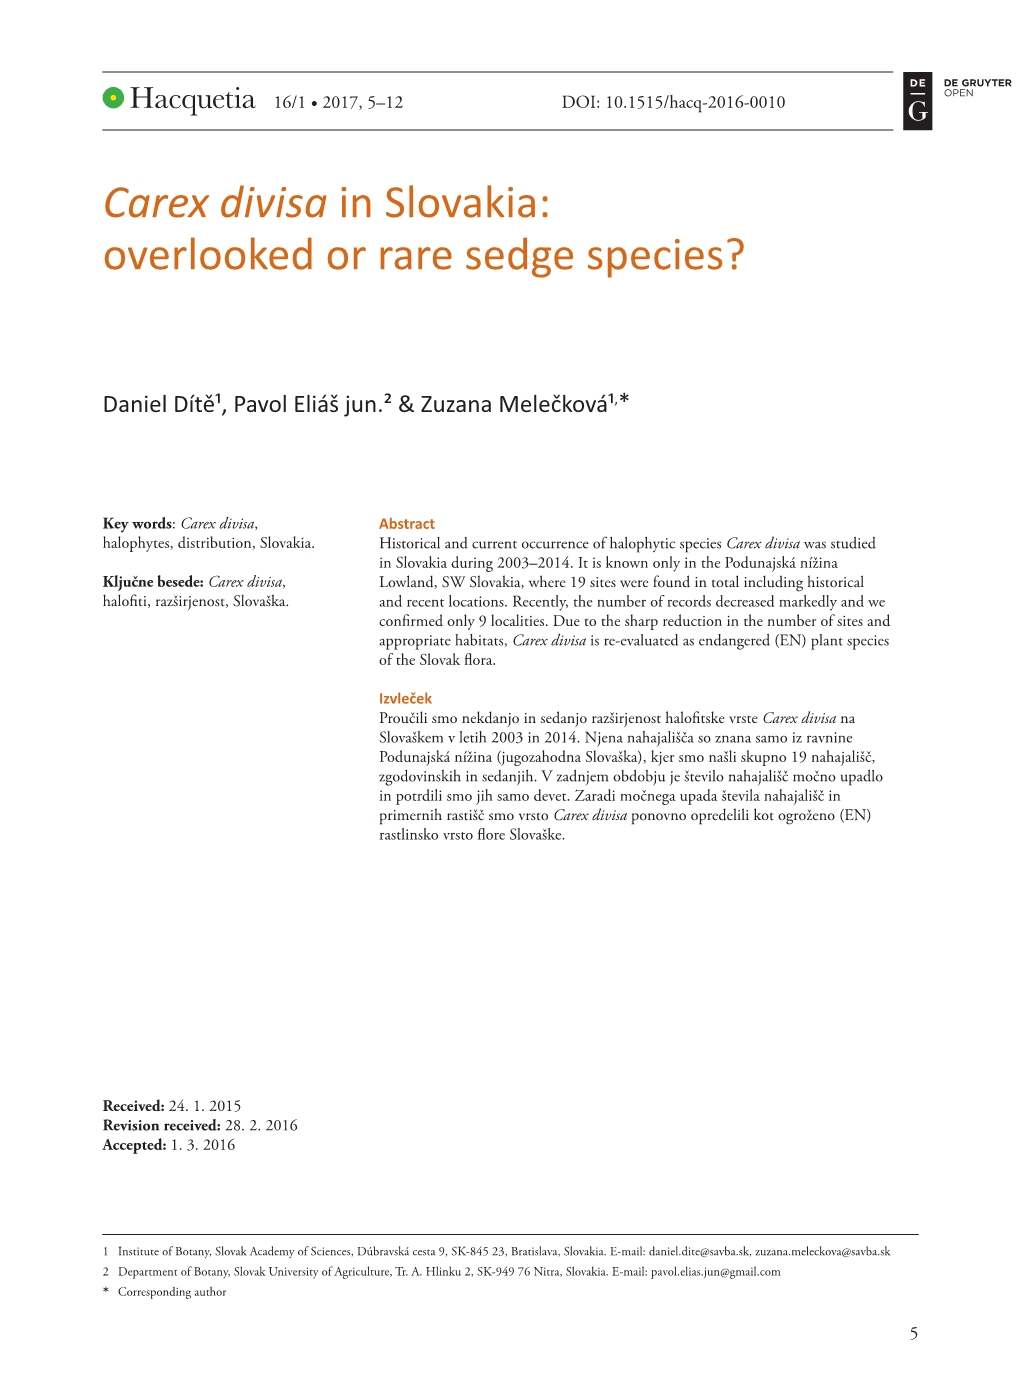 Carex Divisa in Slovakia: Overlooked Or Rare Sedge Species?